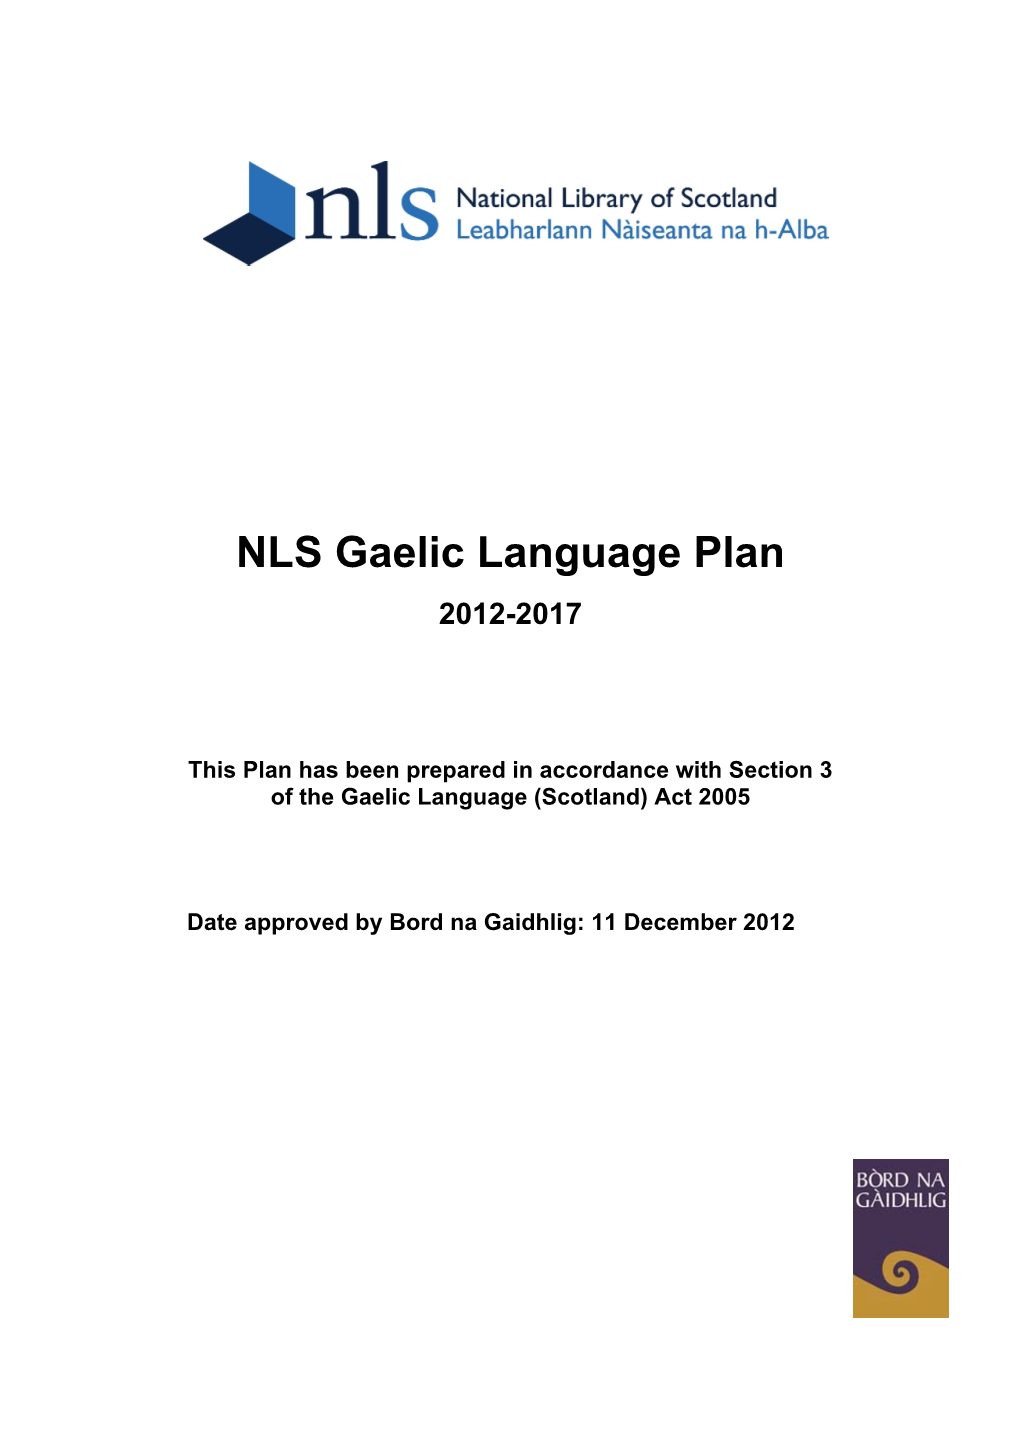 National Library of Scotland Gaelic Language Plan 2012-17